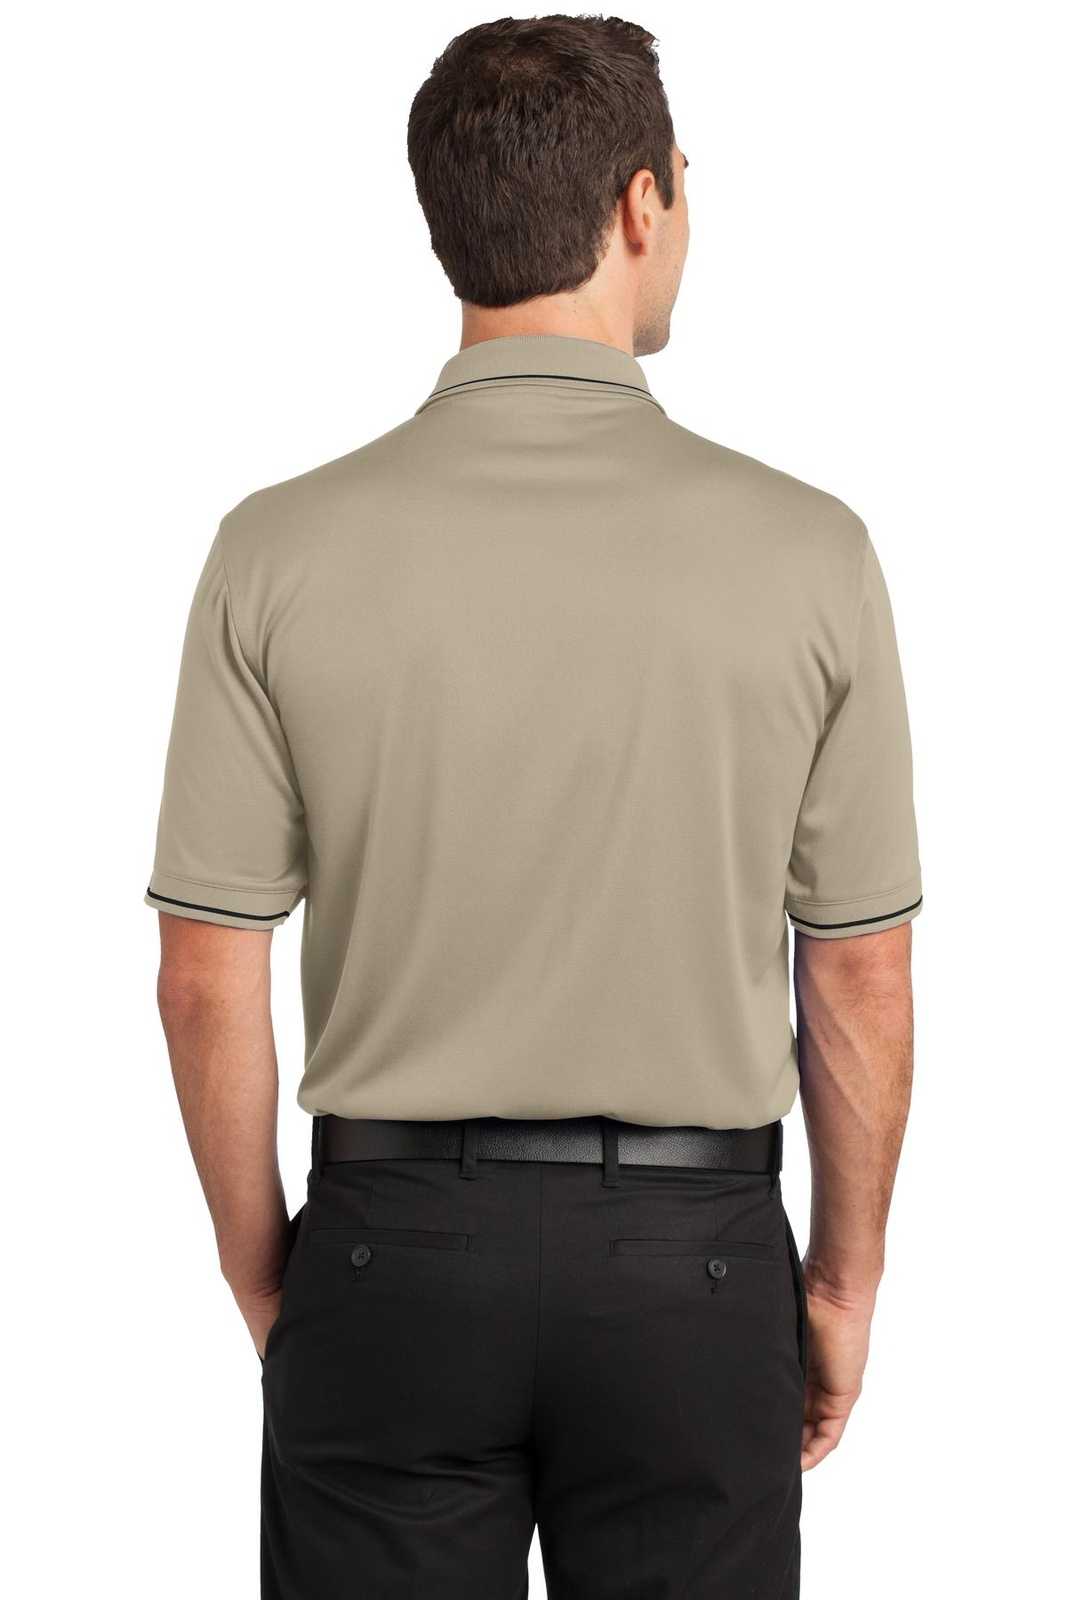 CornerStone CS415 Select Snag-Proof Tipped Pocket Polo - Tan Black - HIT a Double - 2